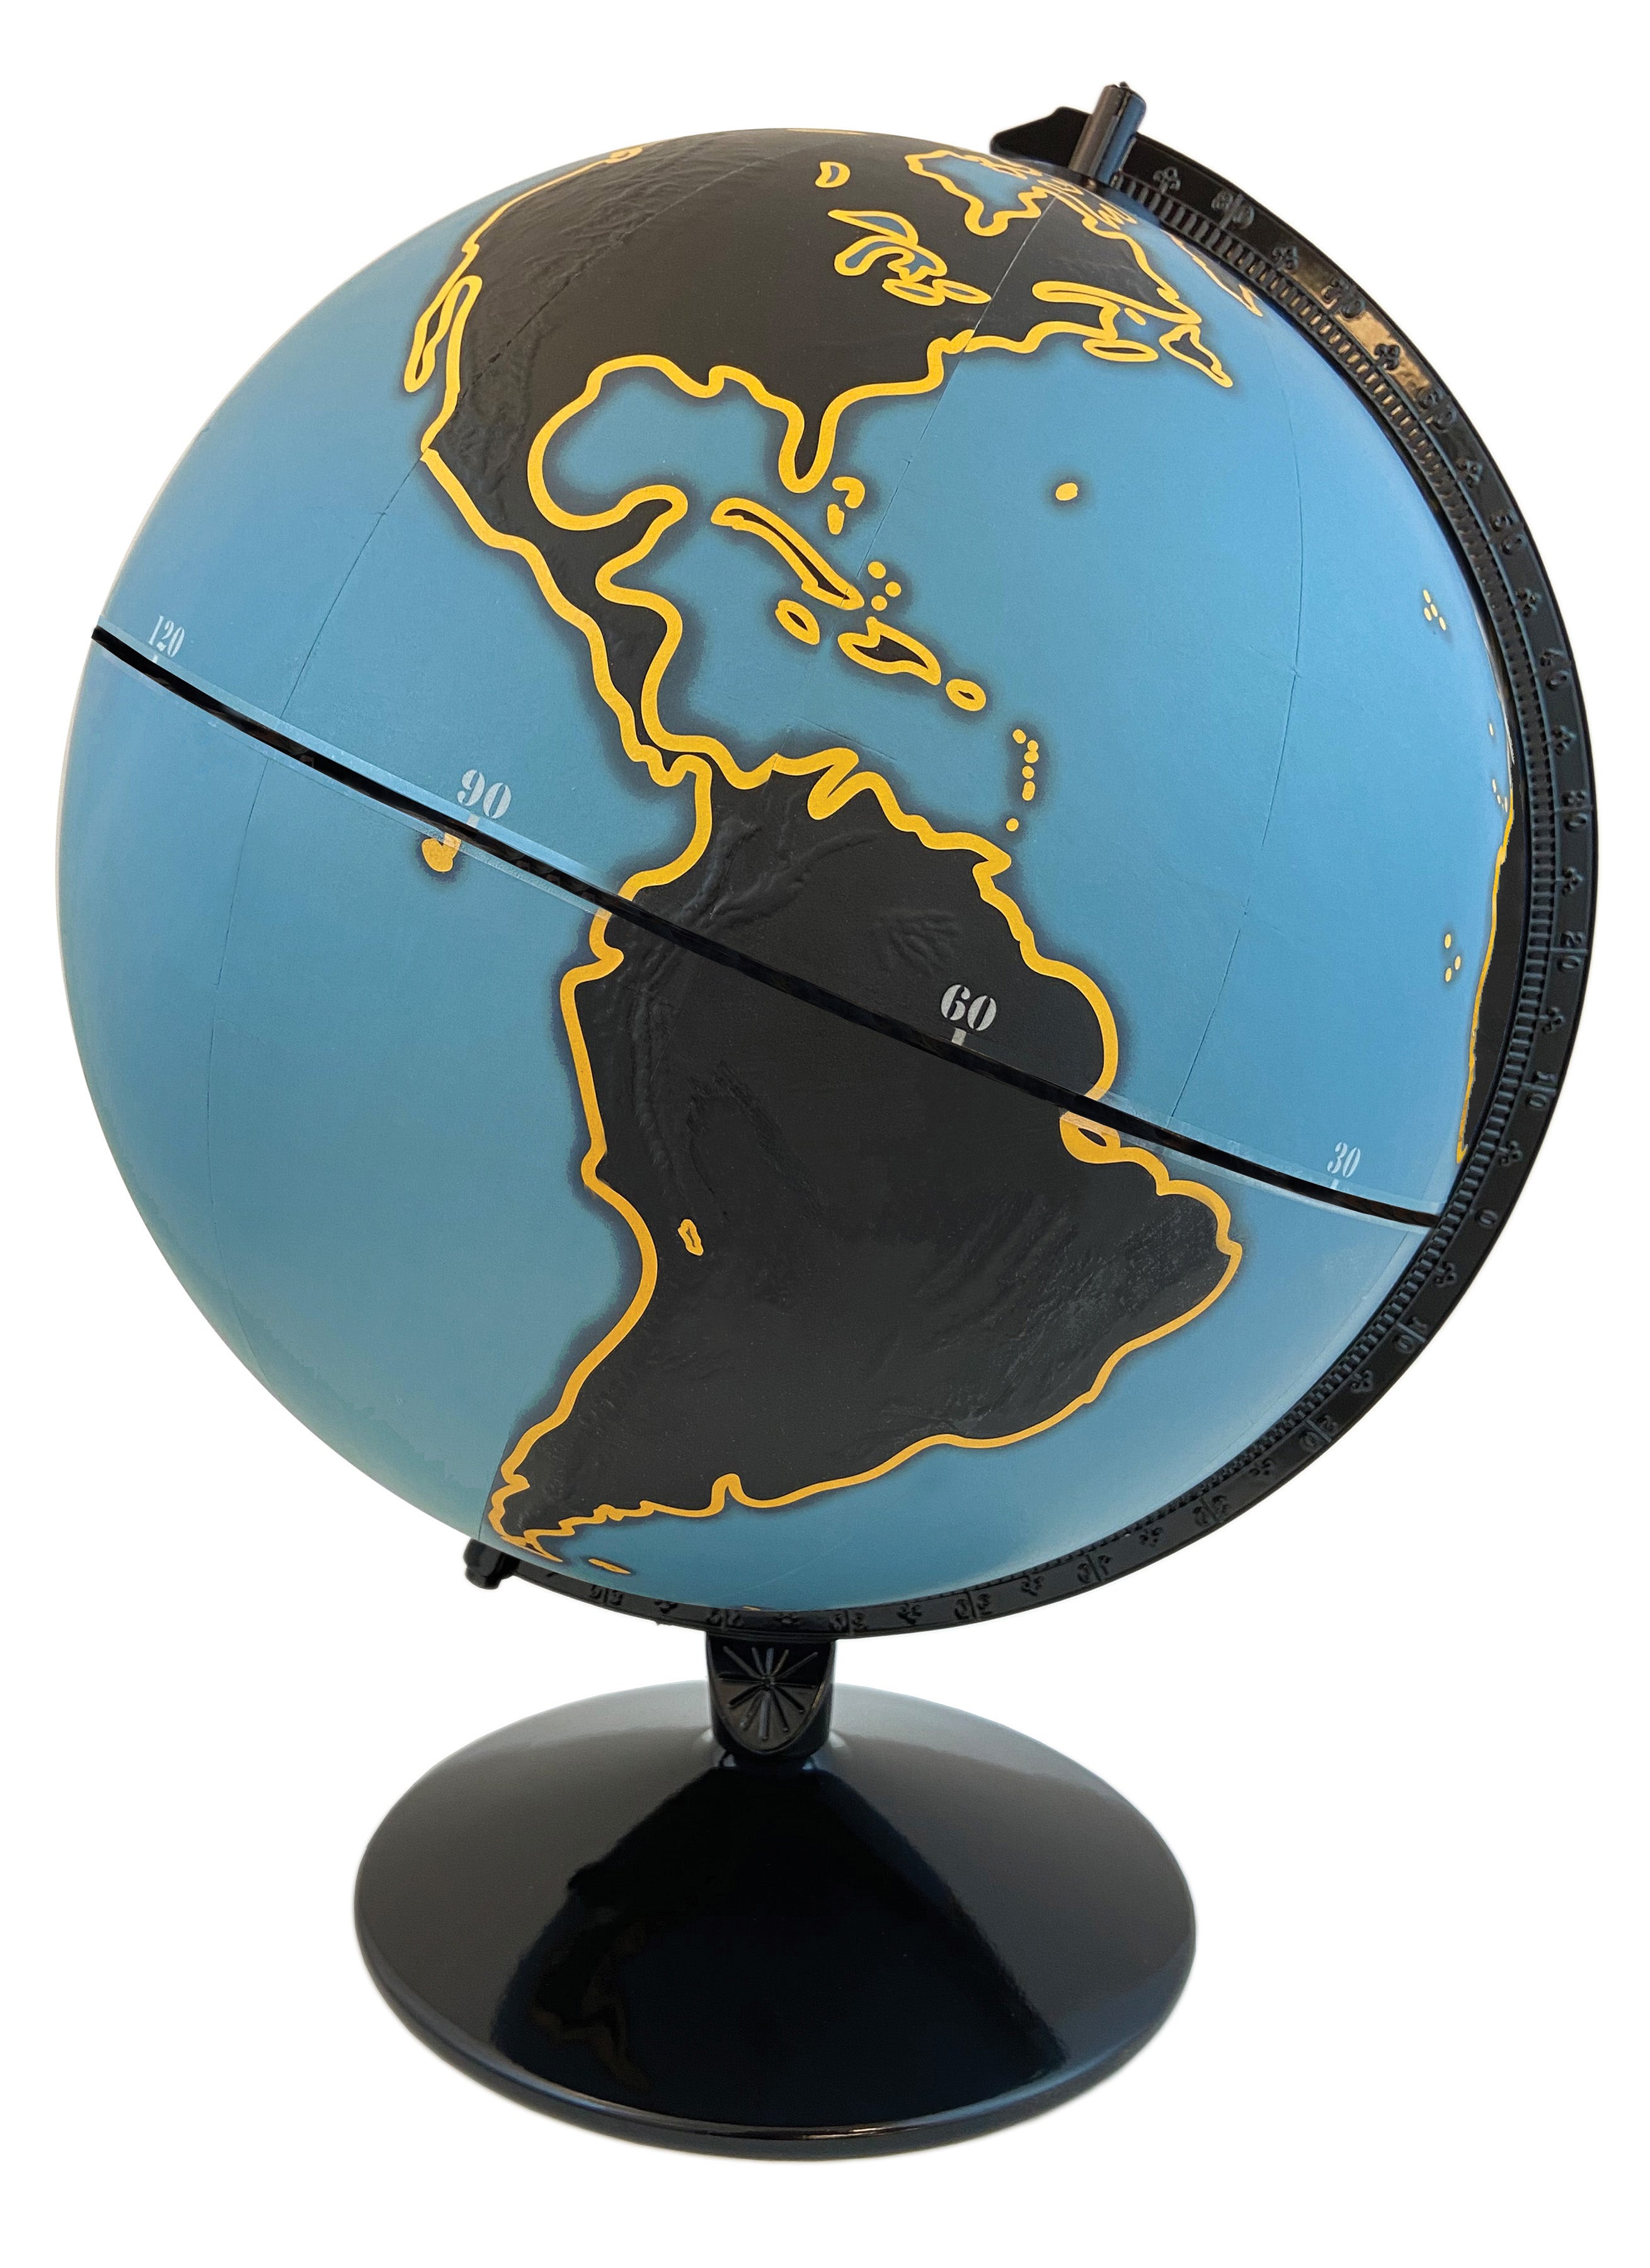 Concord 12 Inch Desktop World Globe By Replogle Globes